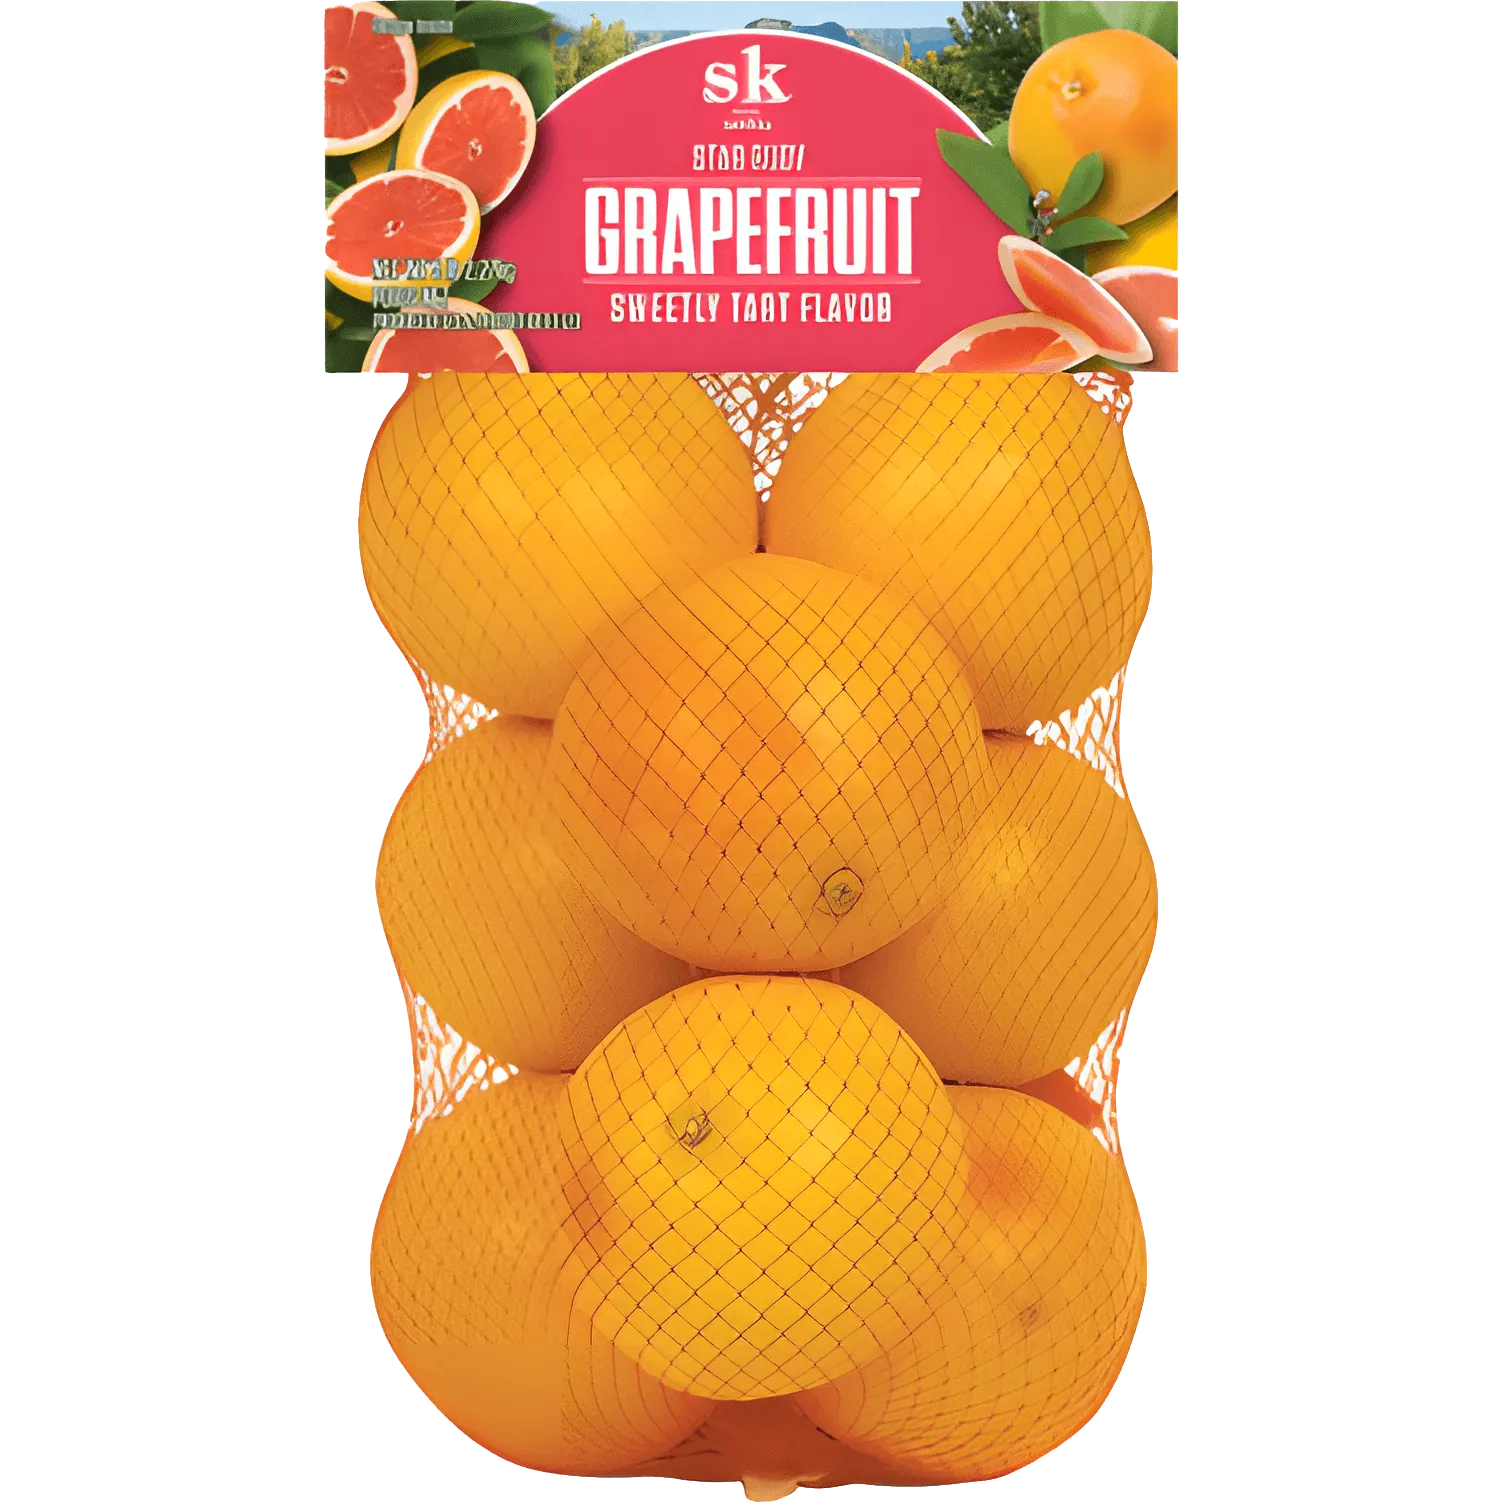 Free Sunkist Fresh Grapefruit